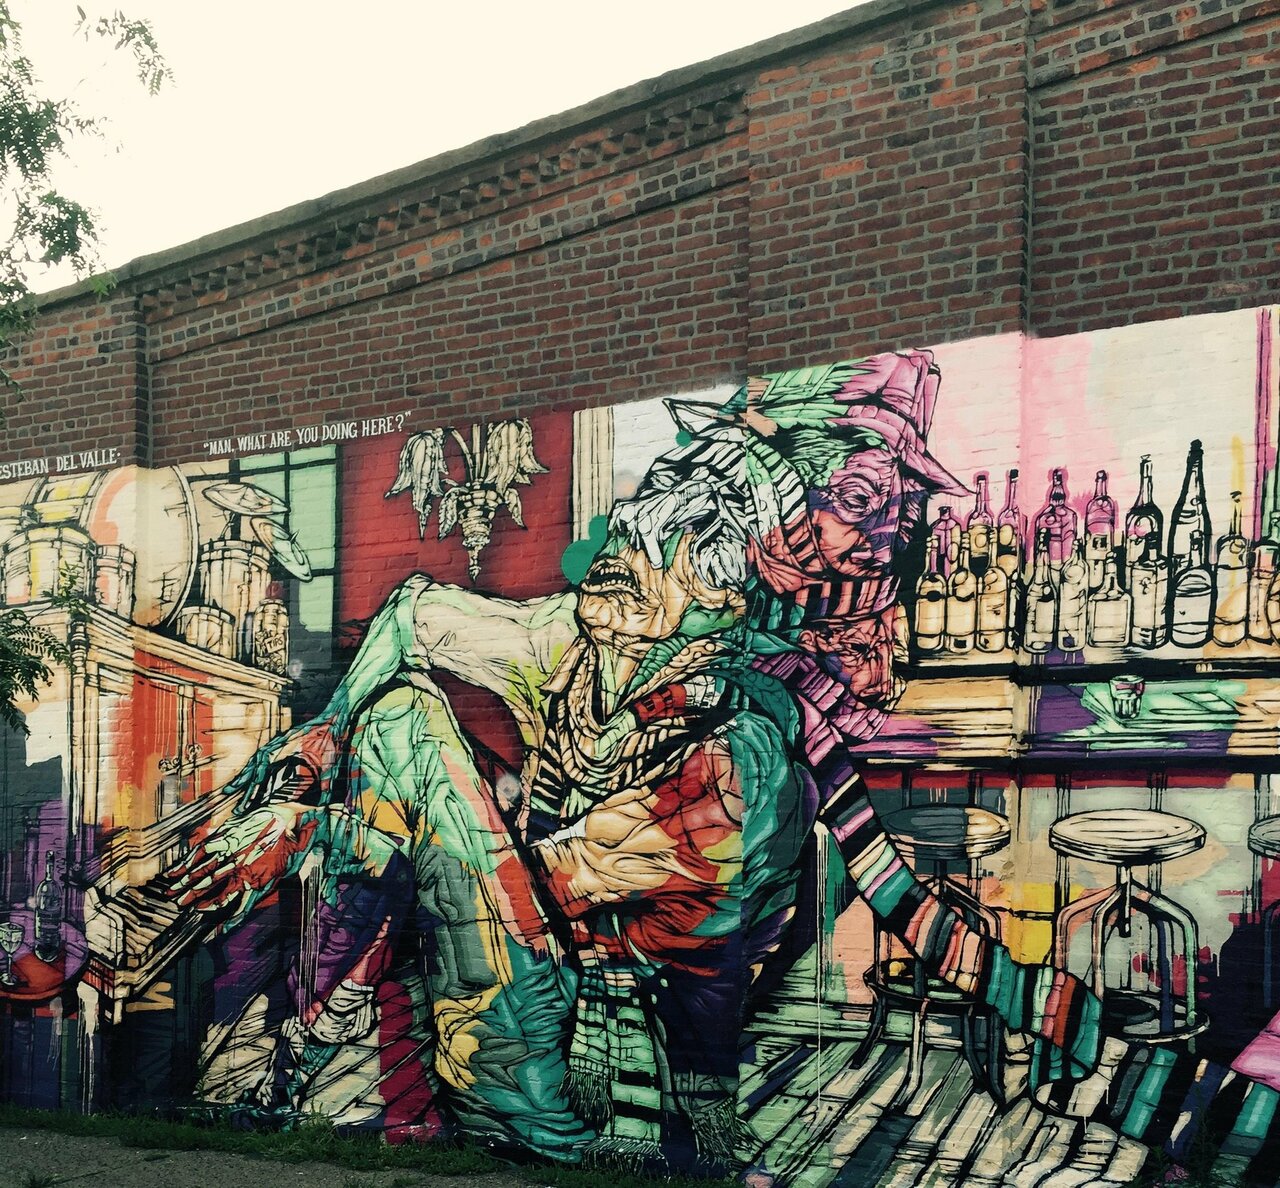 RT @cornostudio: Beautiful street art in Brooklyn
#loveNYC #arte #art #mural #streetart  #graffiti http://t.co/fVDVWrxDFw